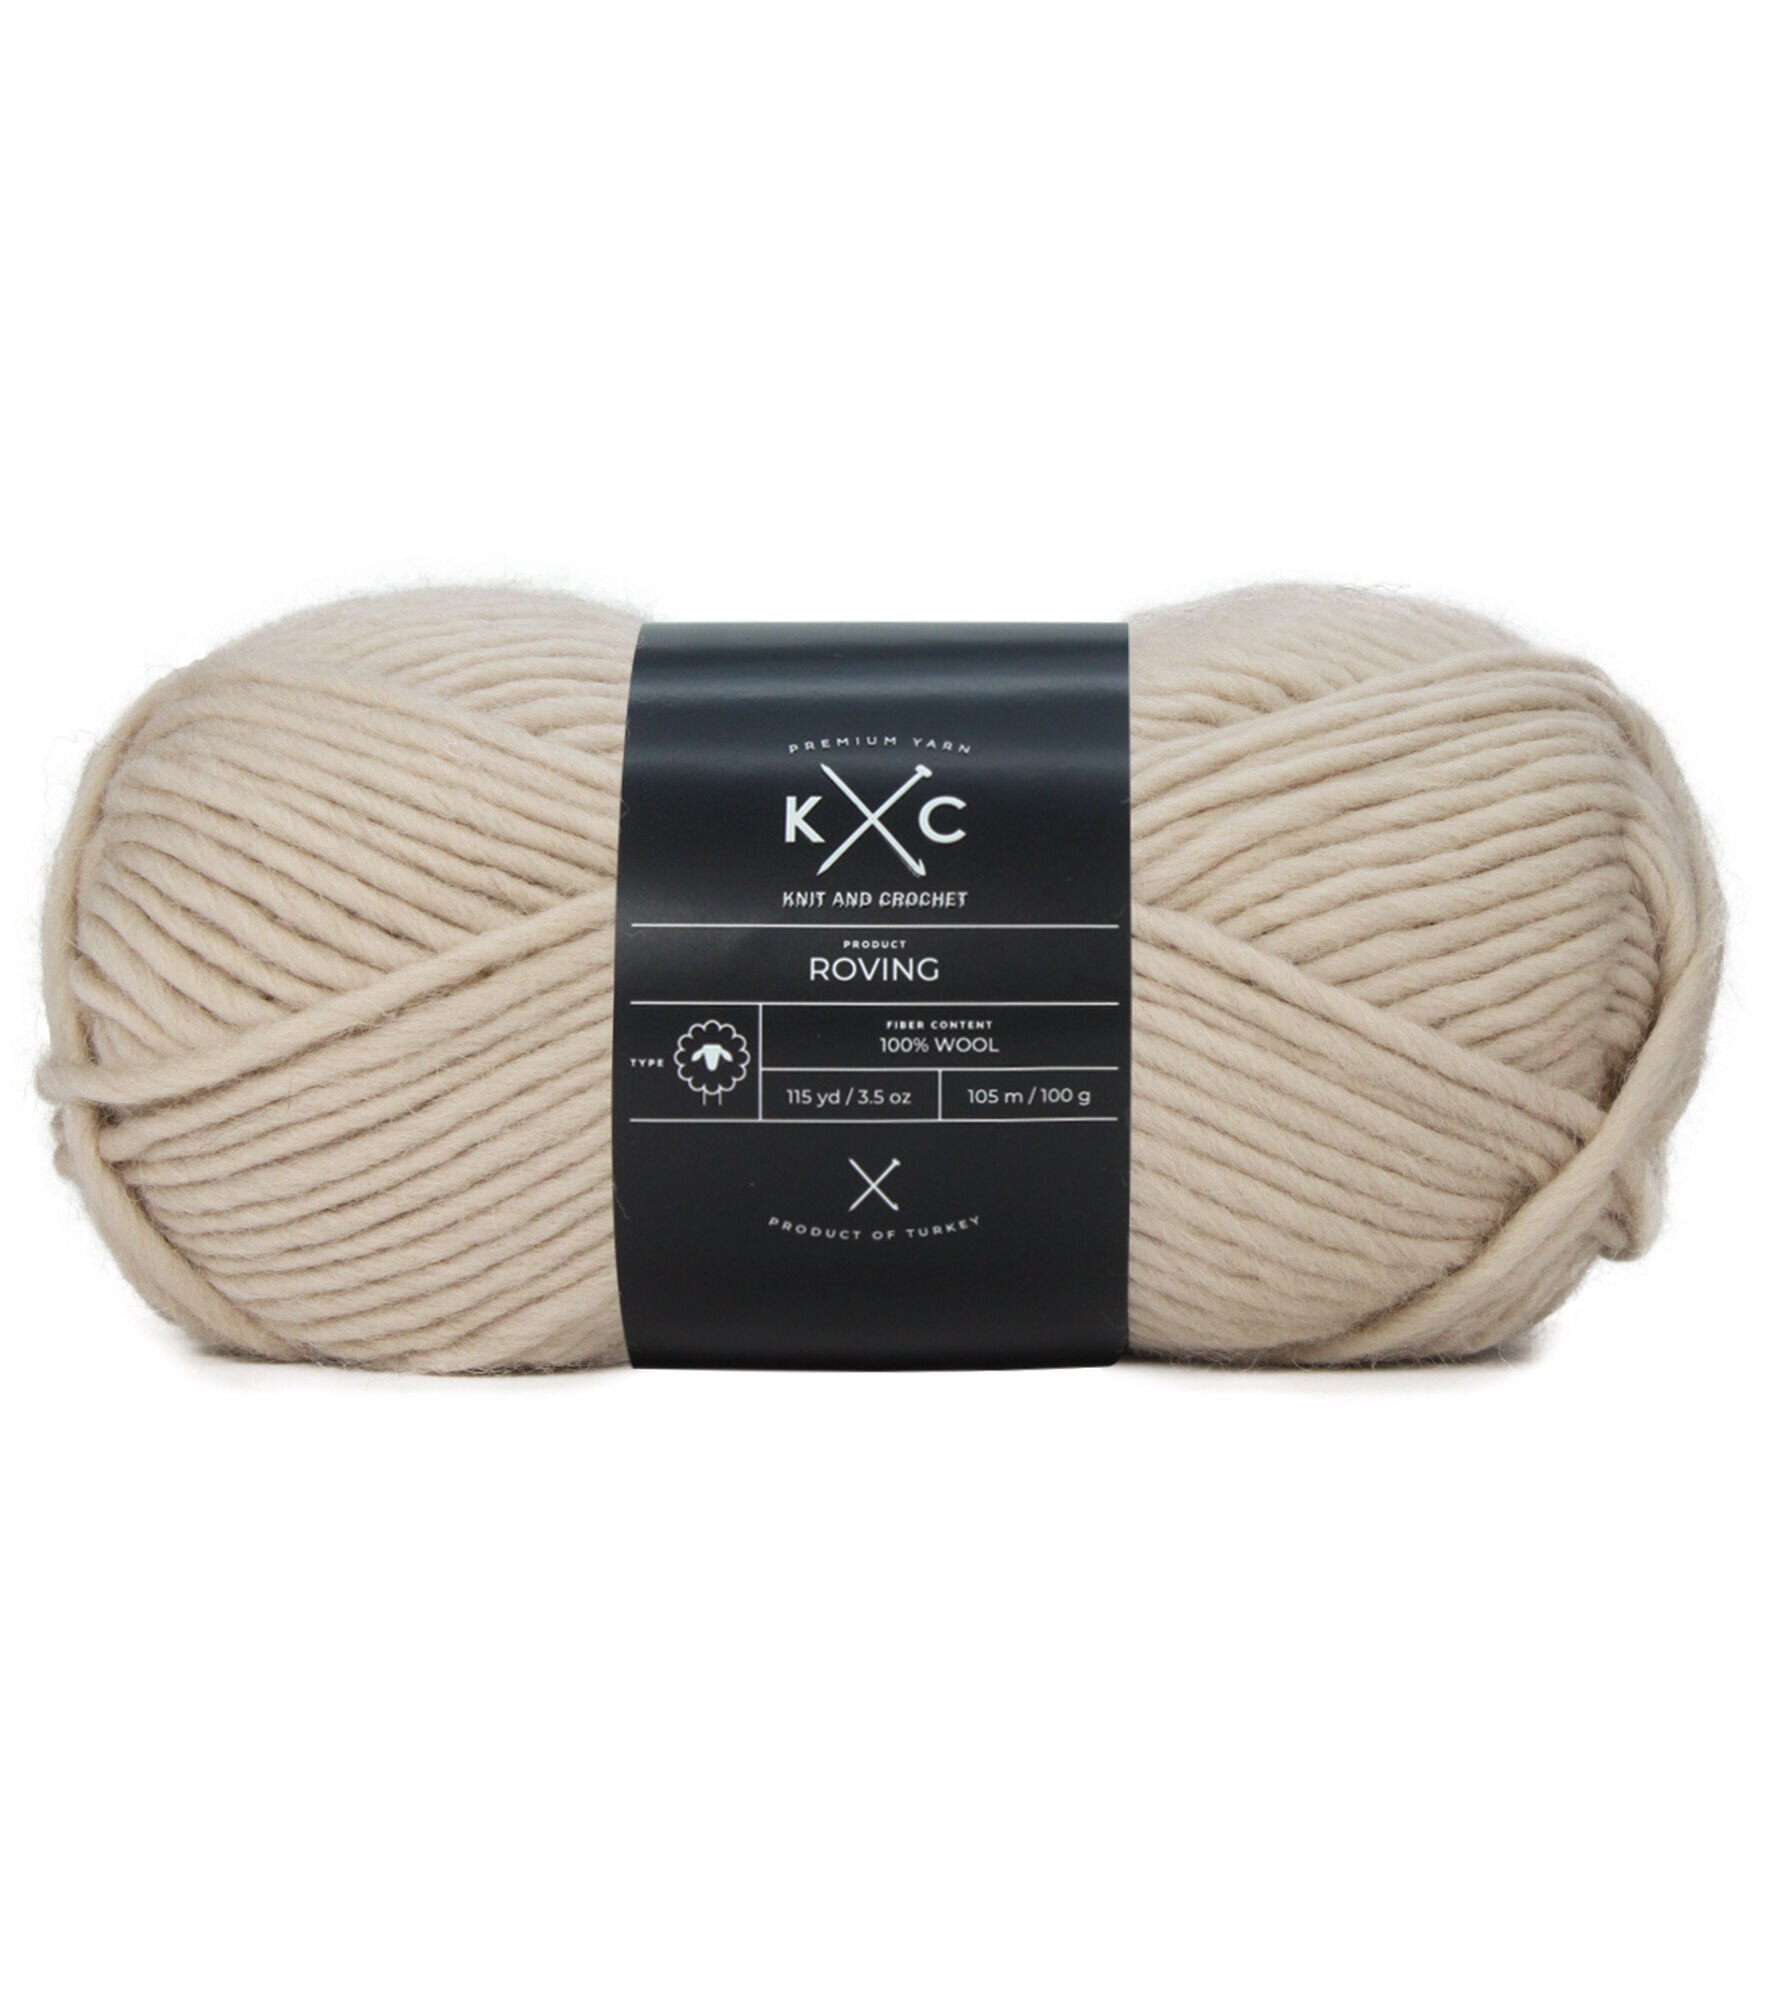  Patons Classic Wool, Grey Yarn, 1 Pack, Gray Mix